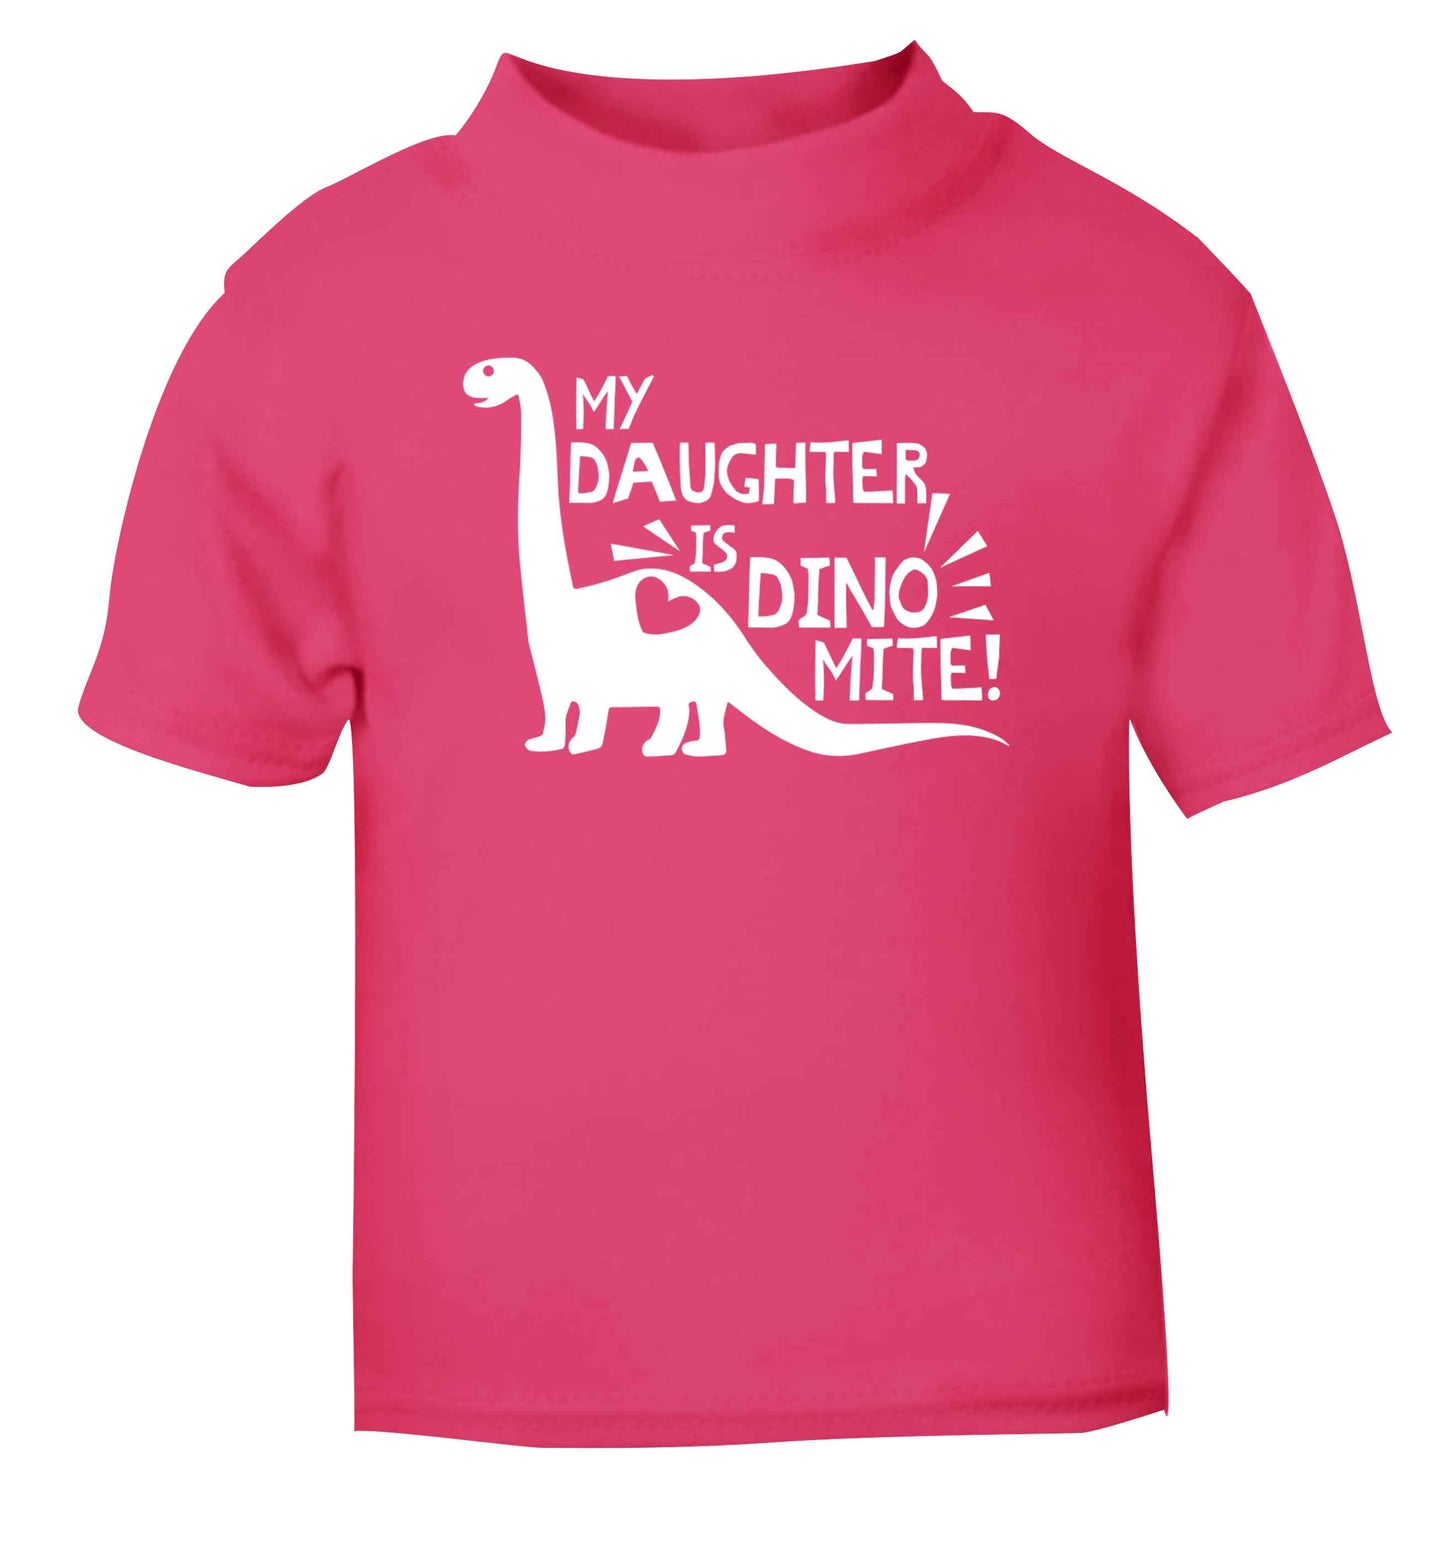 My daughter is dinomite! pink Baby Toddler Tshirt 2 Years